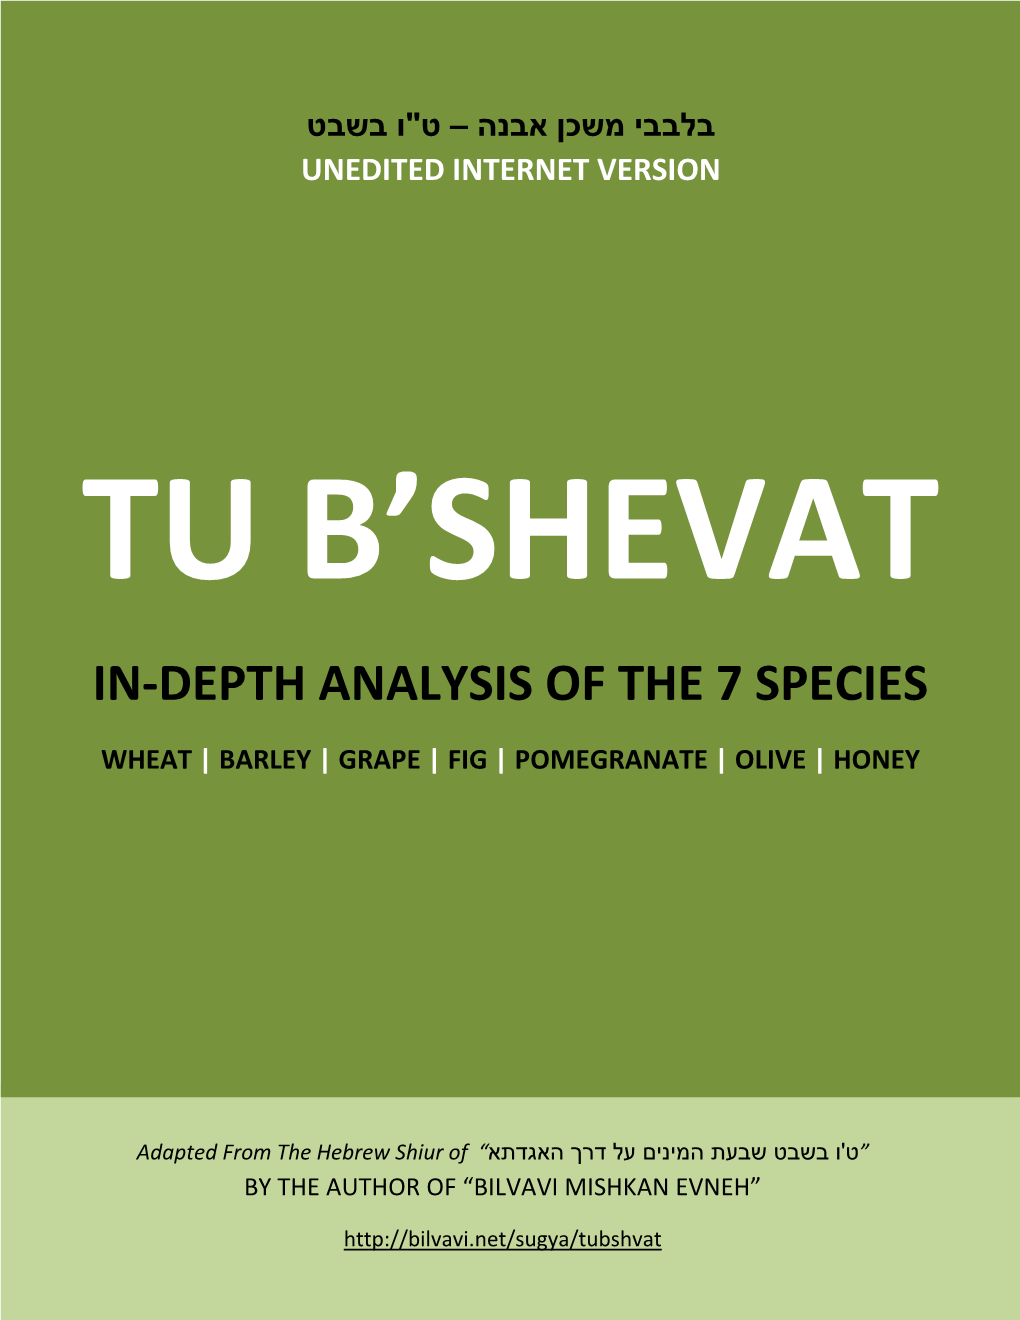 Tu B'shevat | In-Depth Analysis of the 7 Species